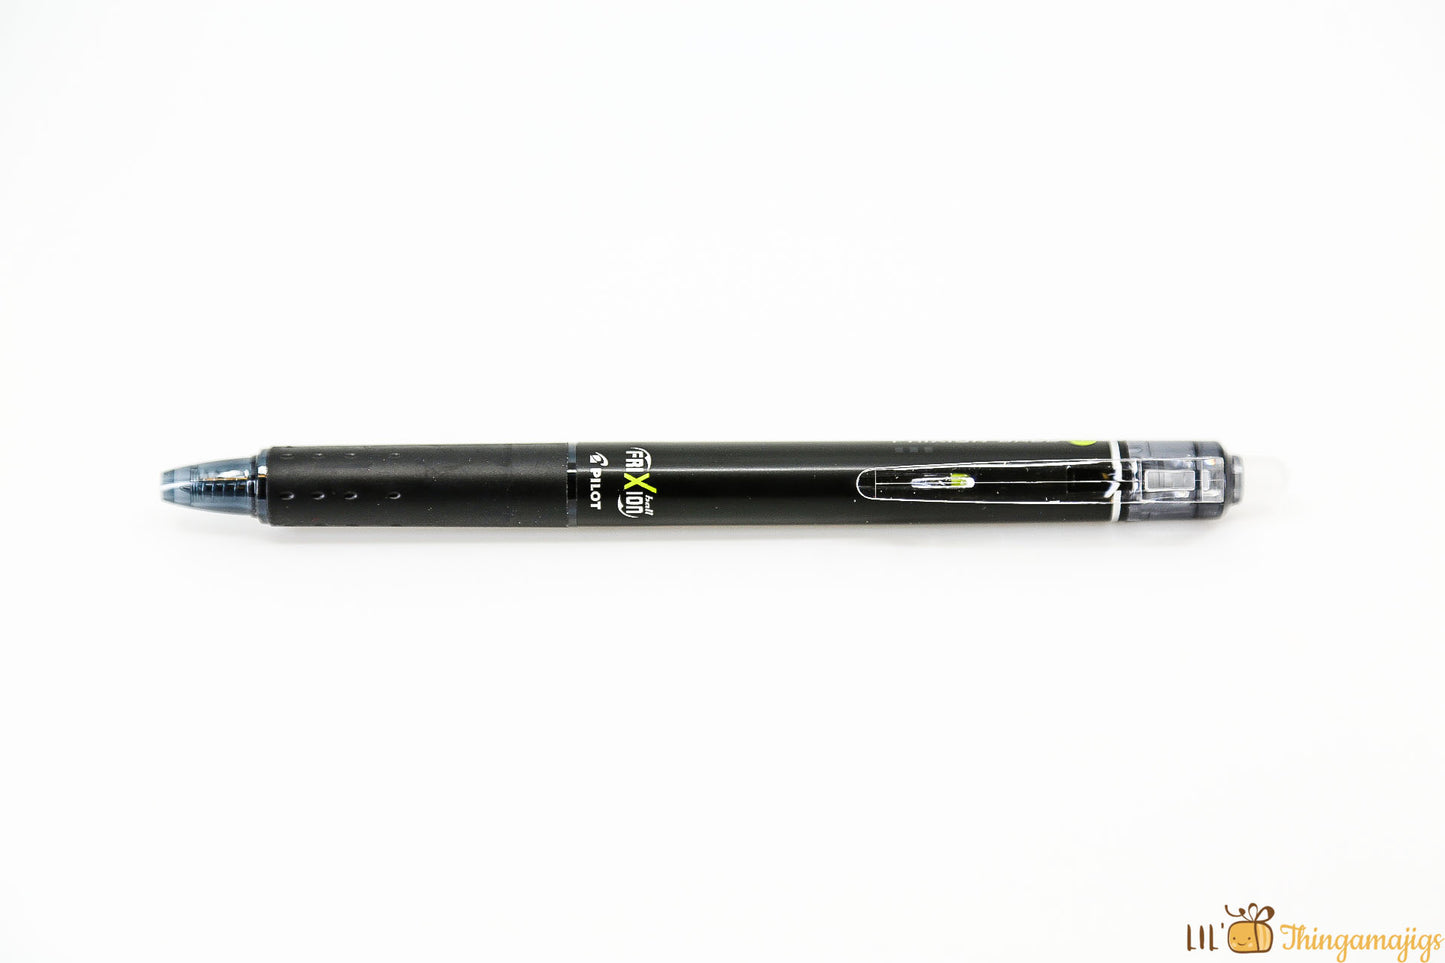 Pilot FriXion Ball 4 Color Erasable Pen - 0.38 mm